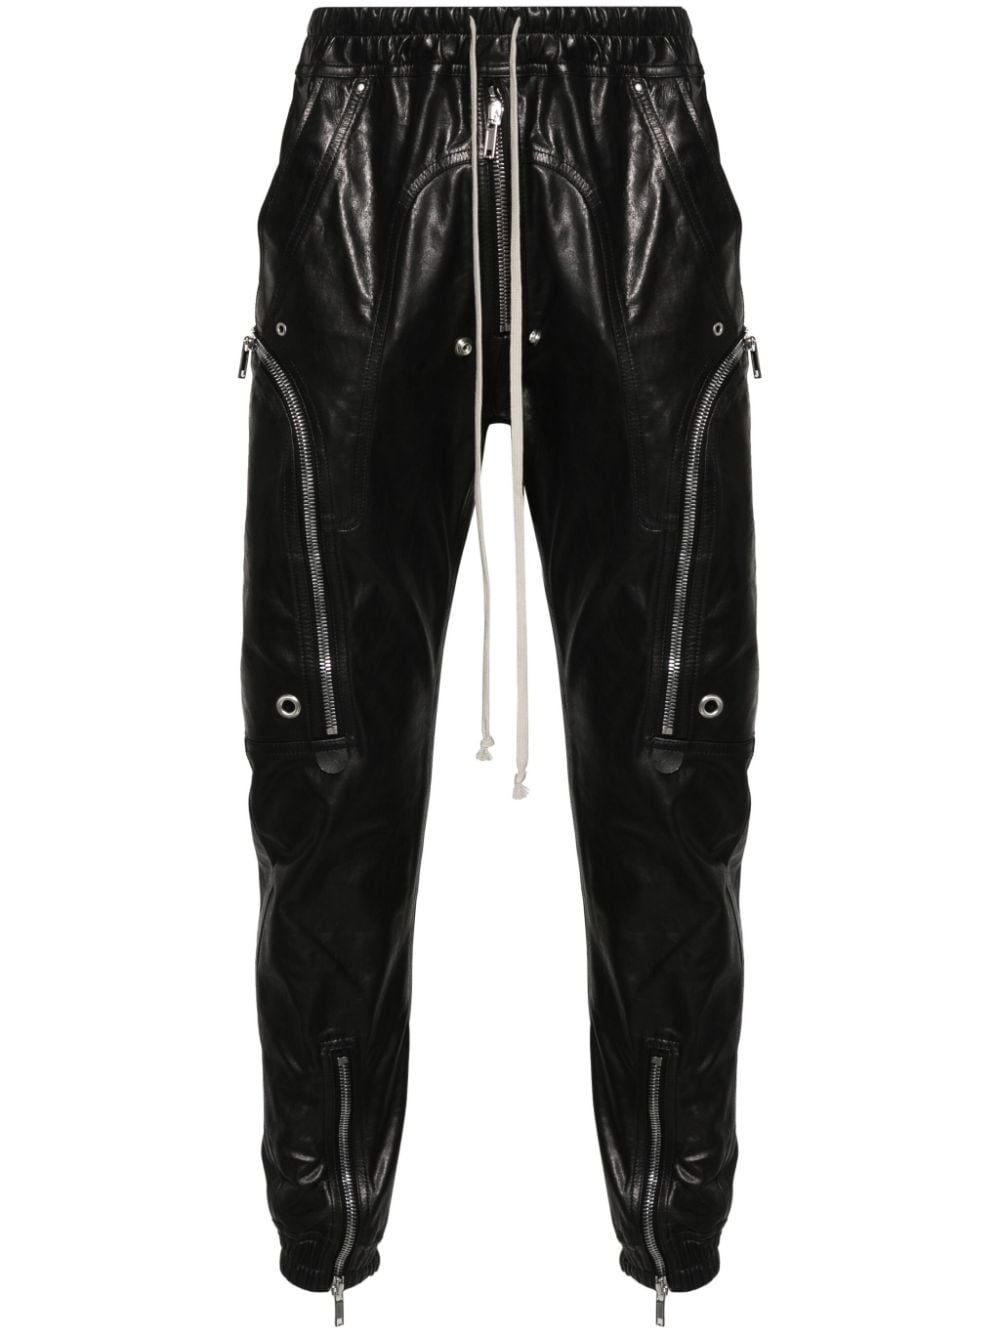 Bauhaus leather cargo pants - 1